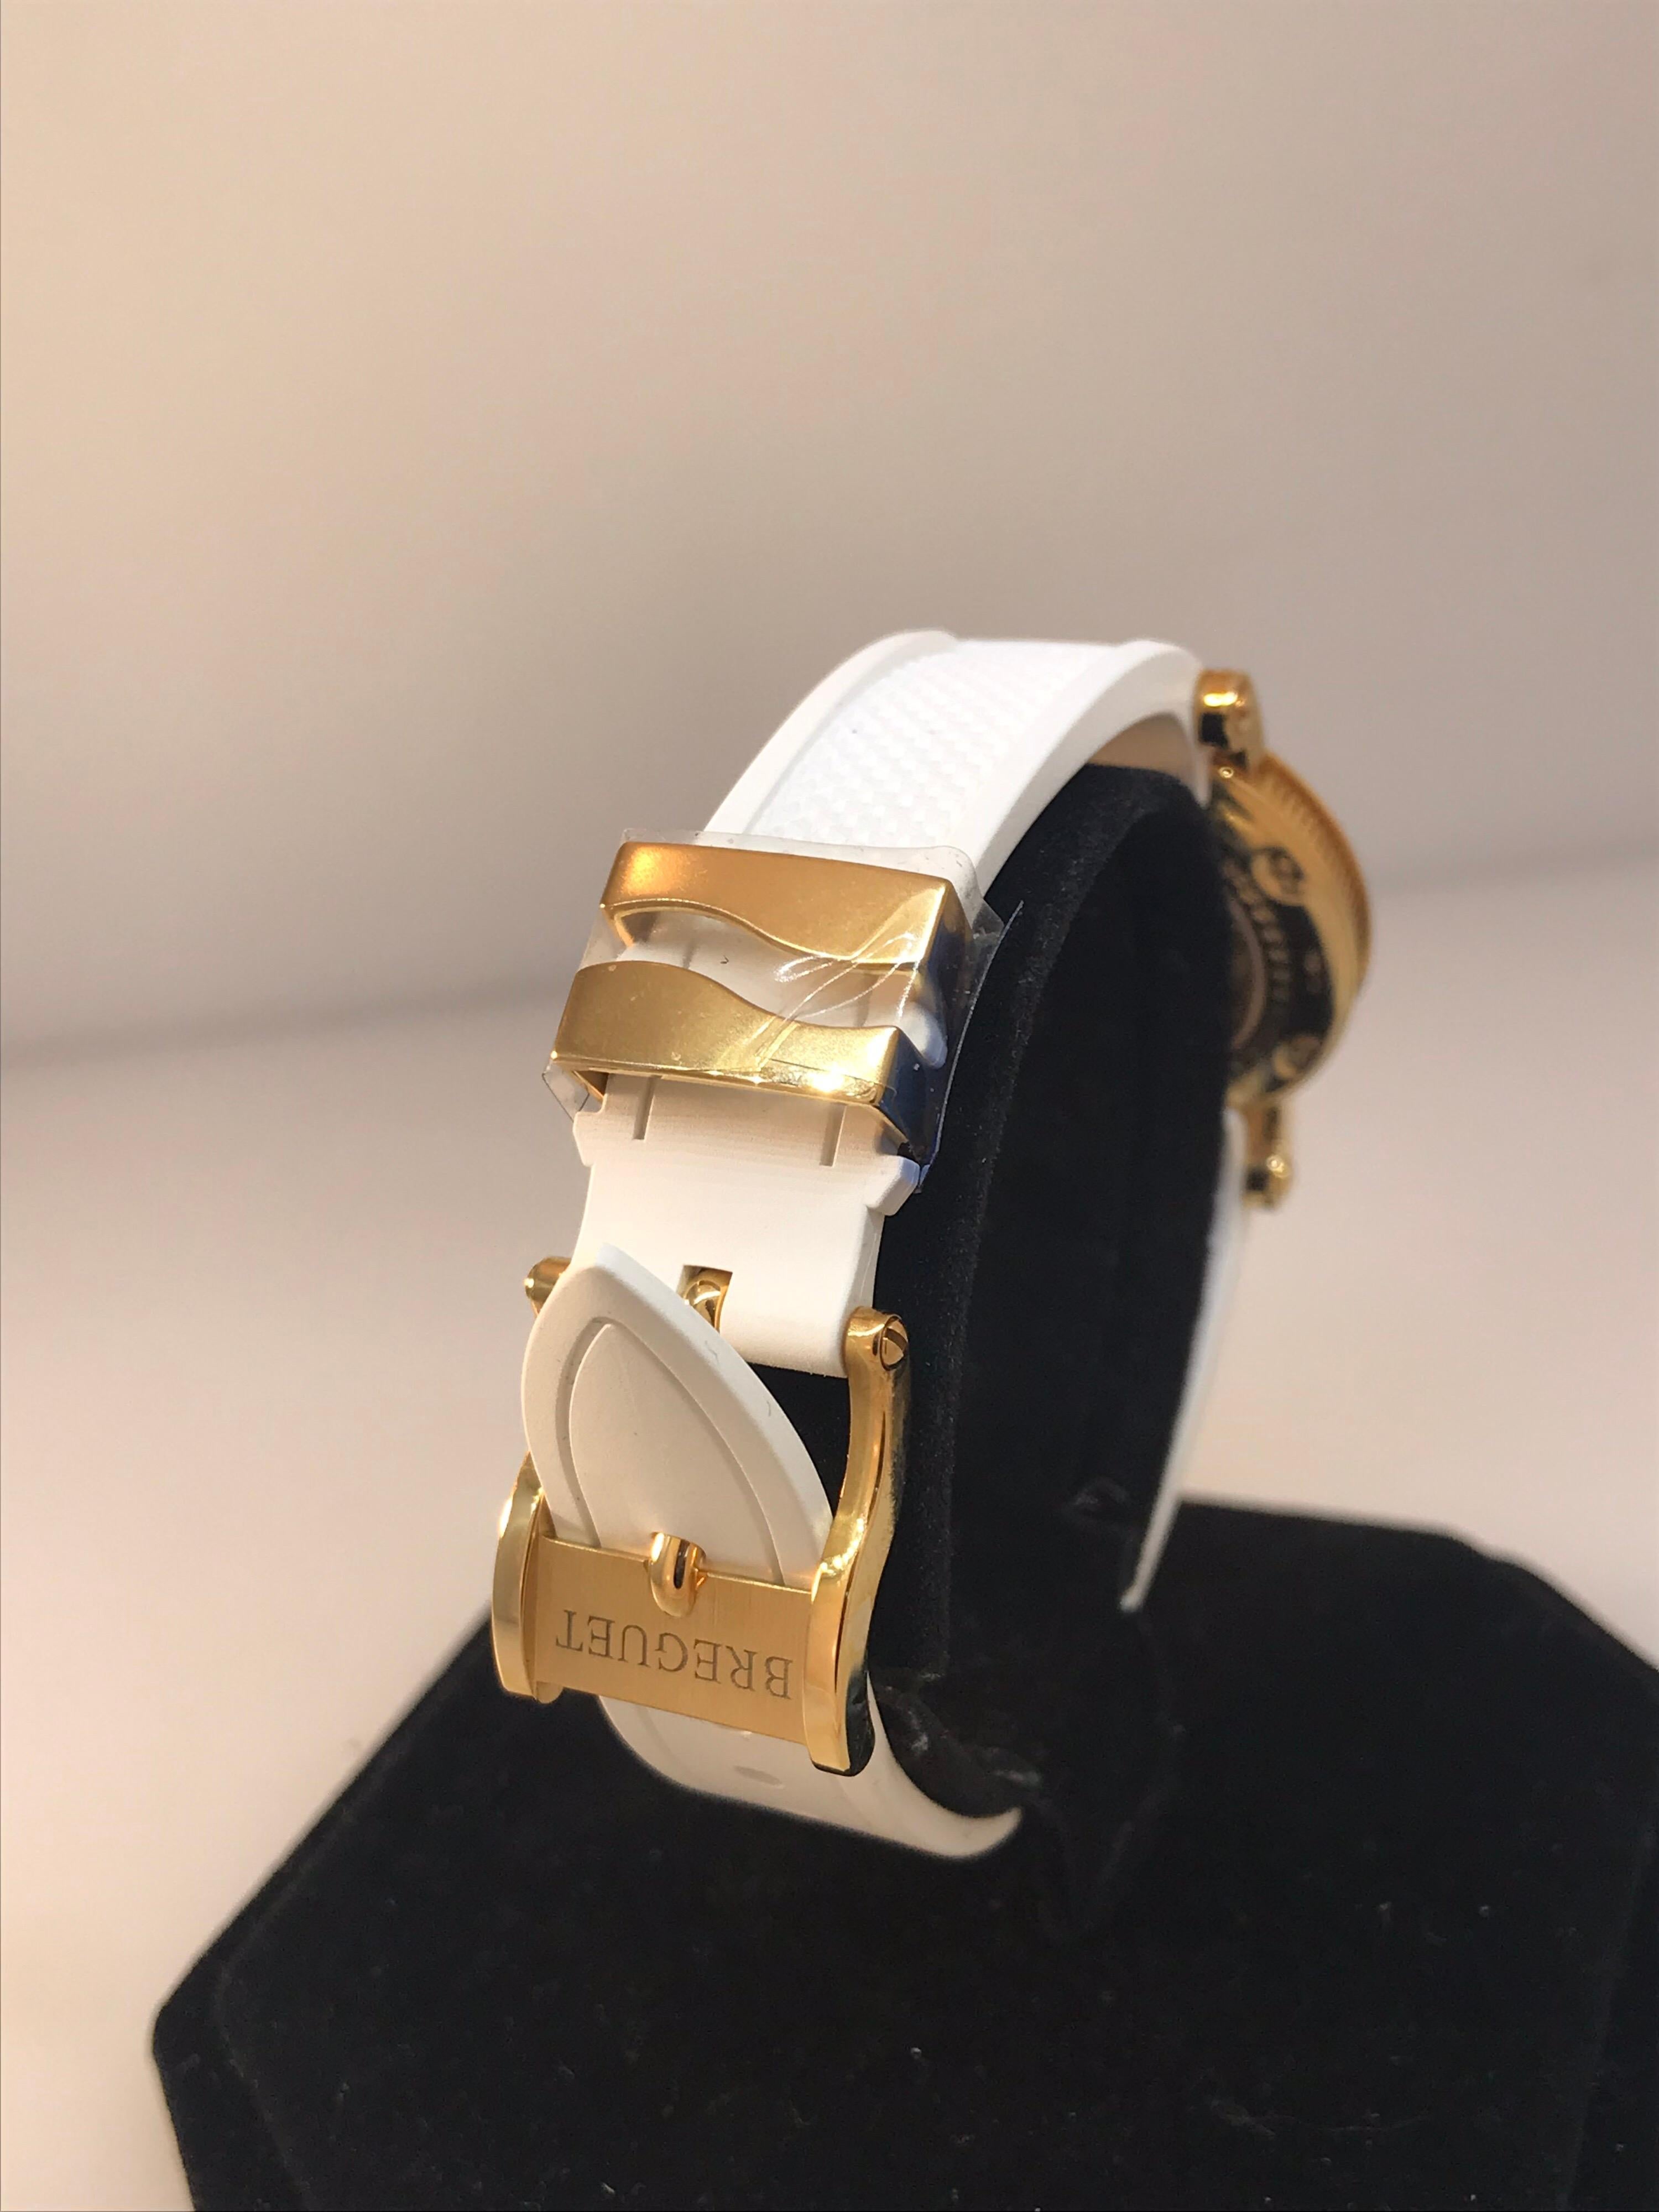 Breguet Marine Yellow Gold Diamond Bezel Ladies Watch 8818ba/59/564.dd00 New For Sale 1